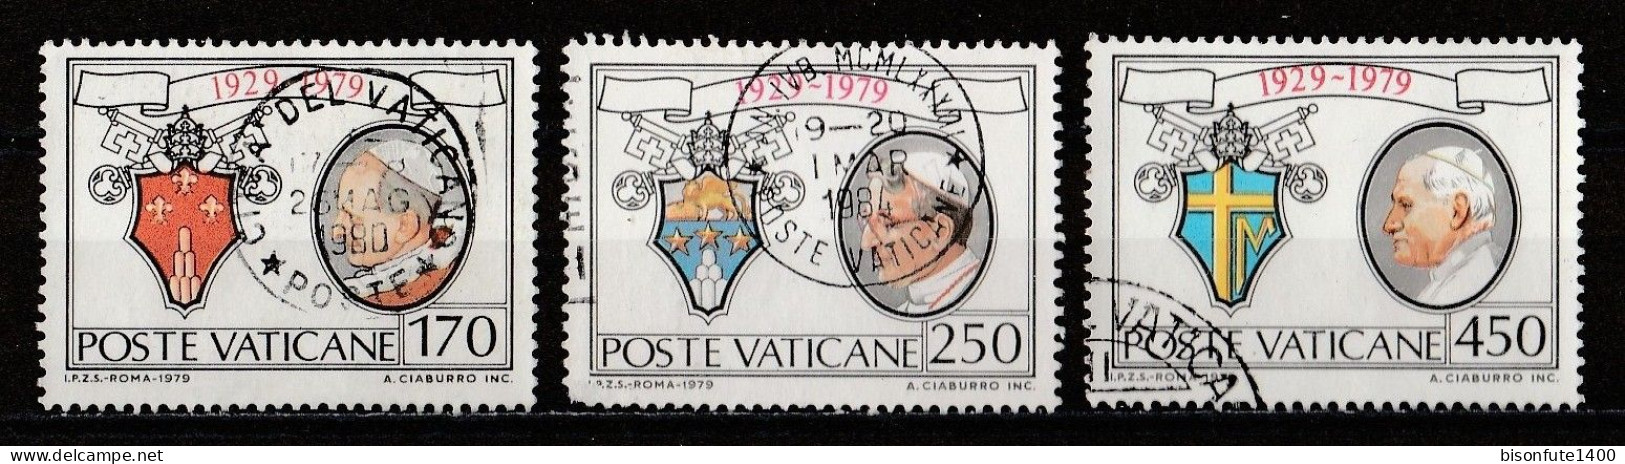 Vatican 1979 : Timbres Yvert & Tellier N° 678 - 679 - 680 - 681 - 682 - 683 Et 684 Oblitérés. - Used Stamps